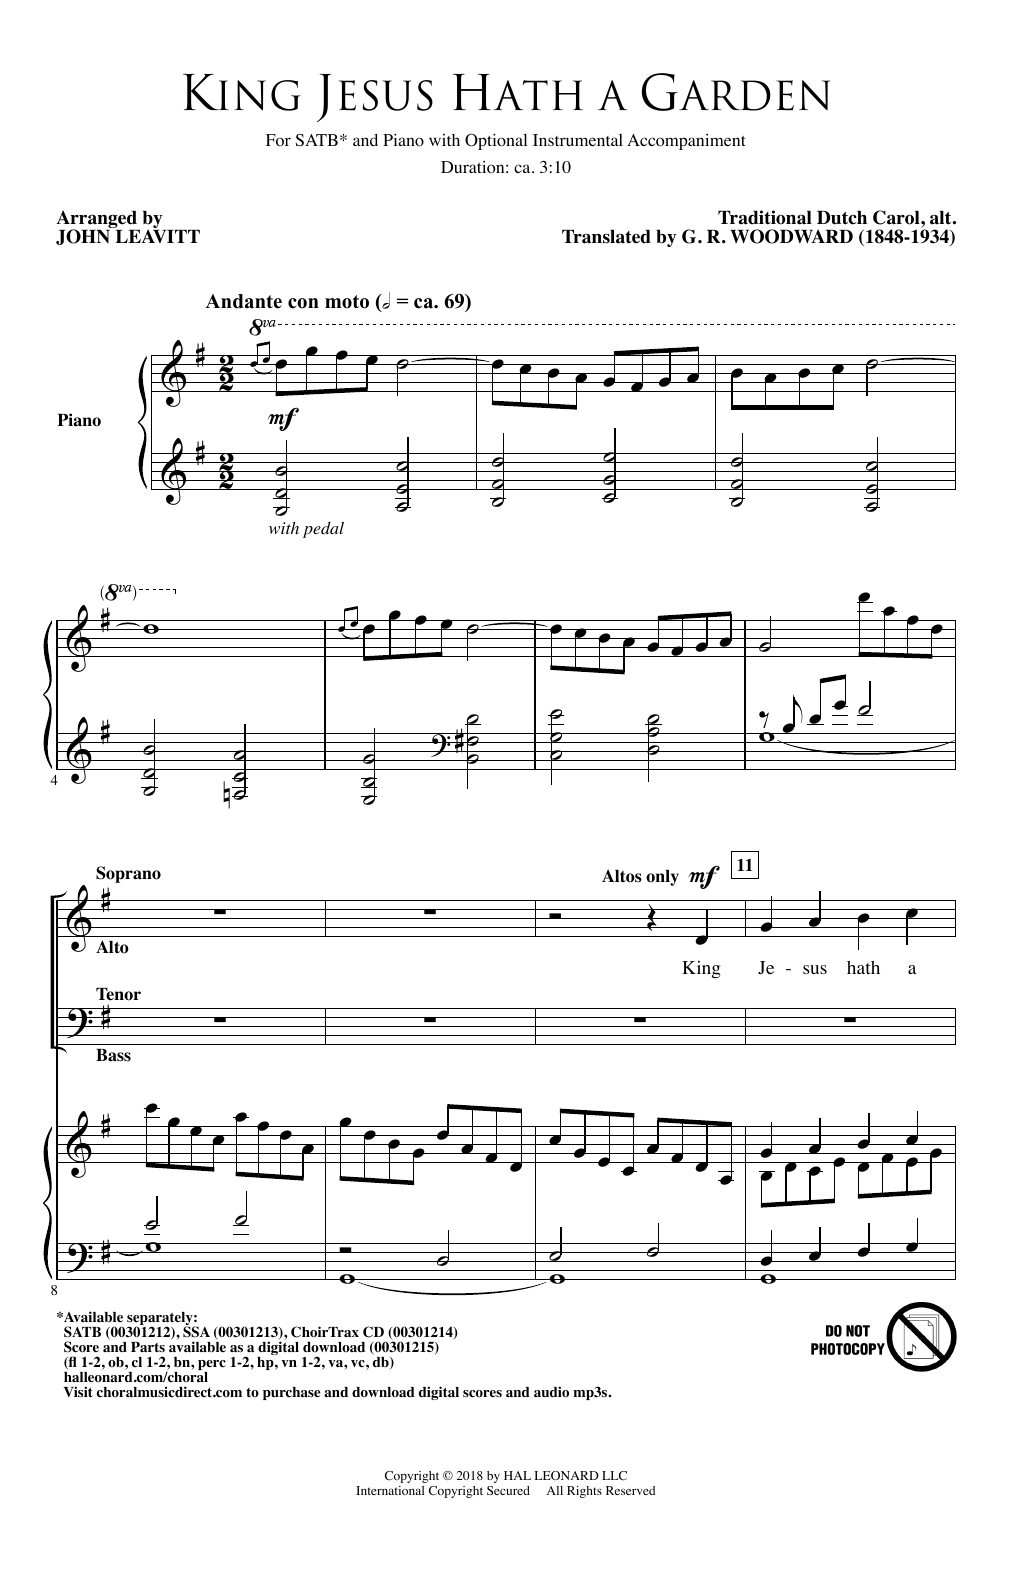 Download Traditional Dutch Carol King Jesus Hath A Garden (arr. John Leavitt) Sheet Music and learn how to play SATB Choir PDF digital score in minutes